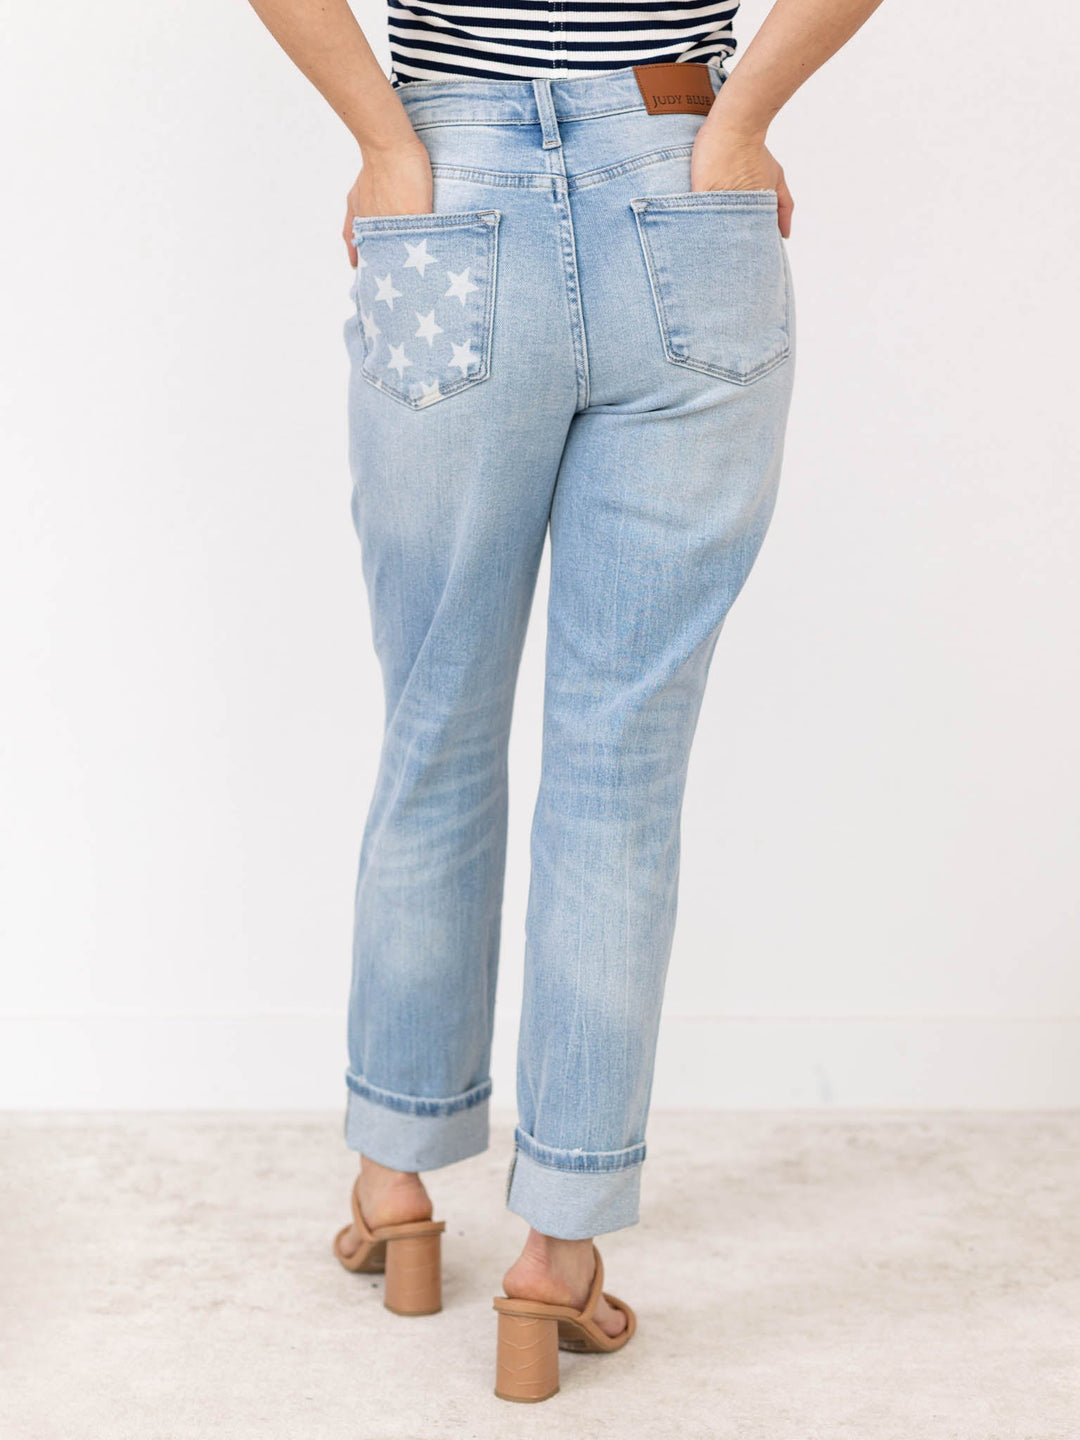 Judy Blue Light AmericanaDenim jeans